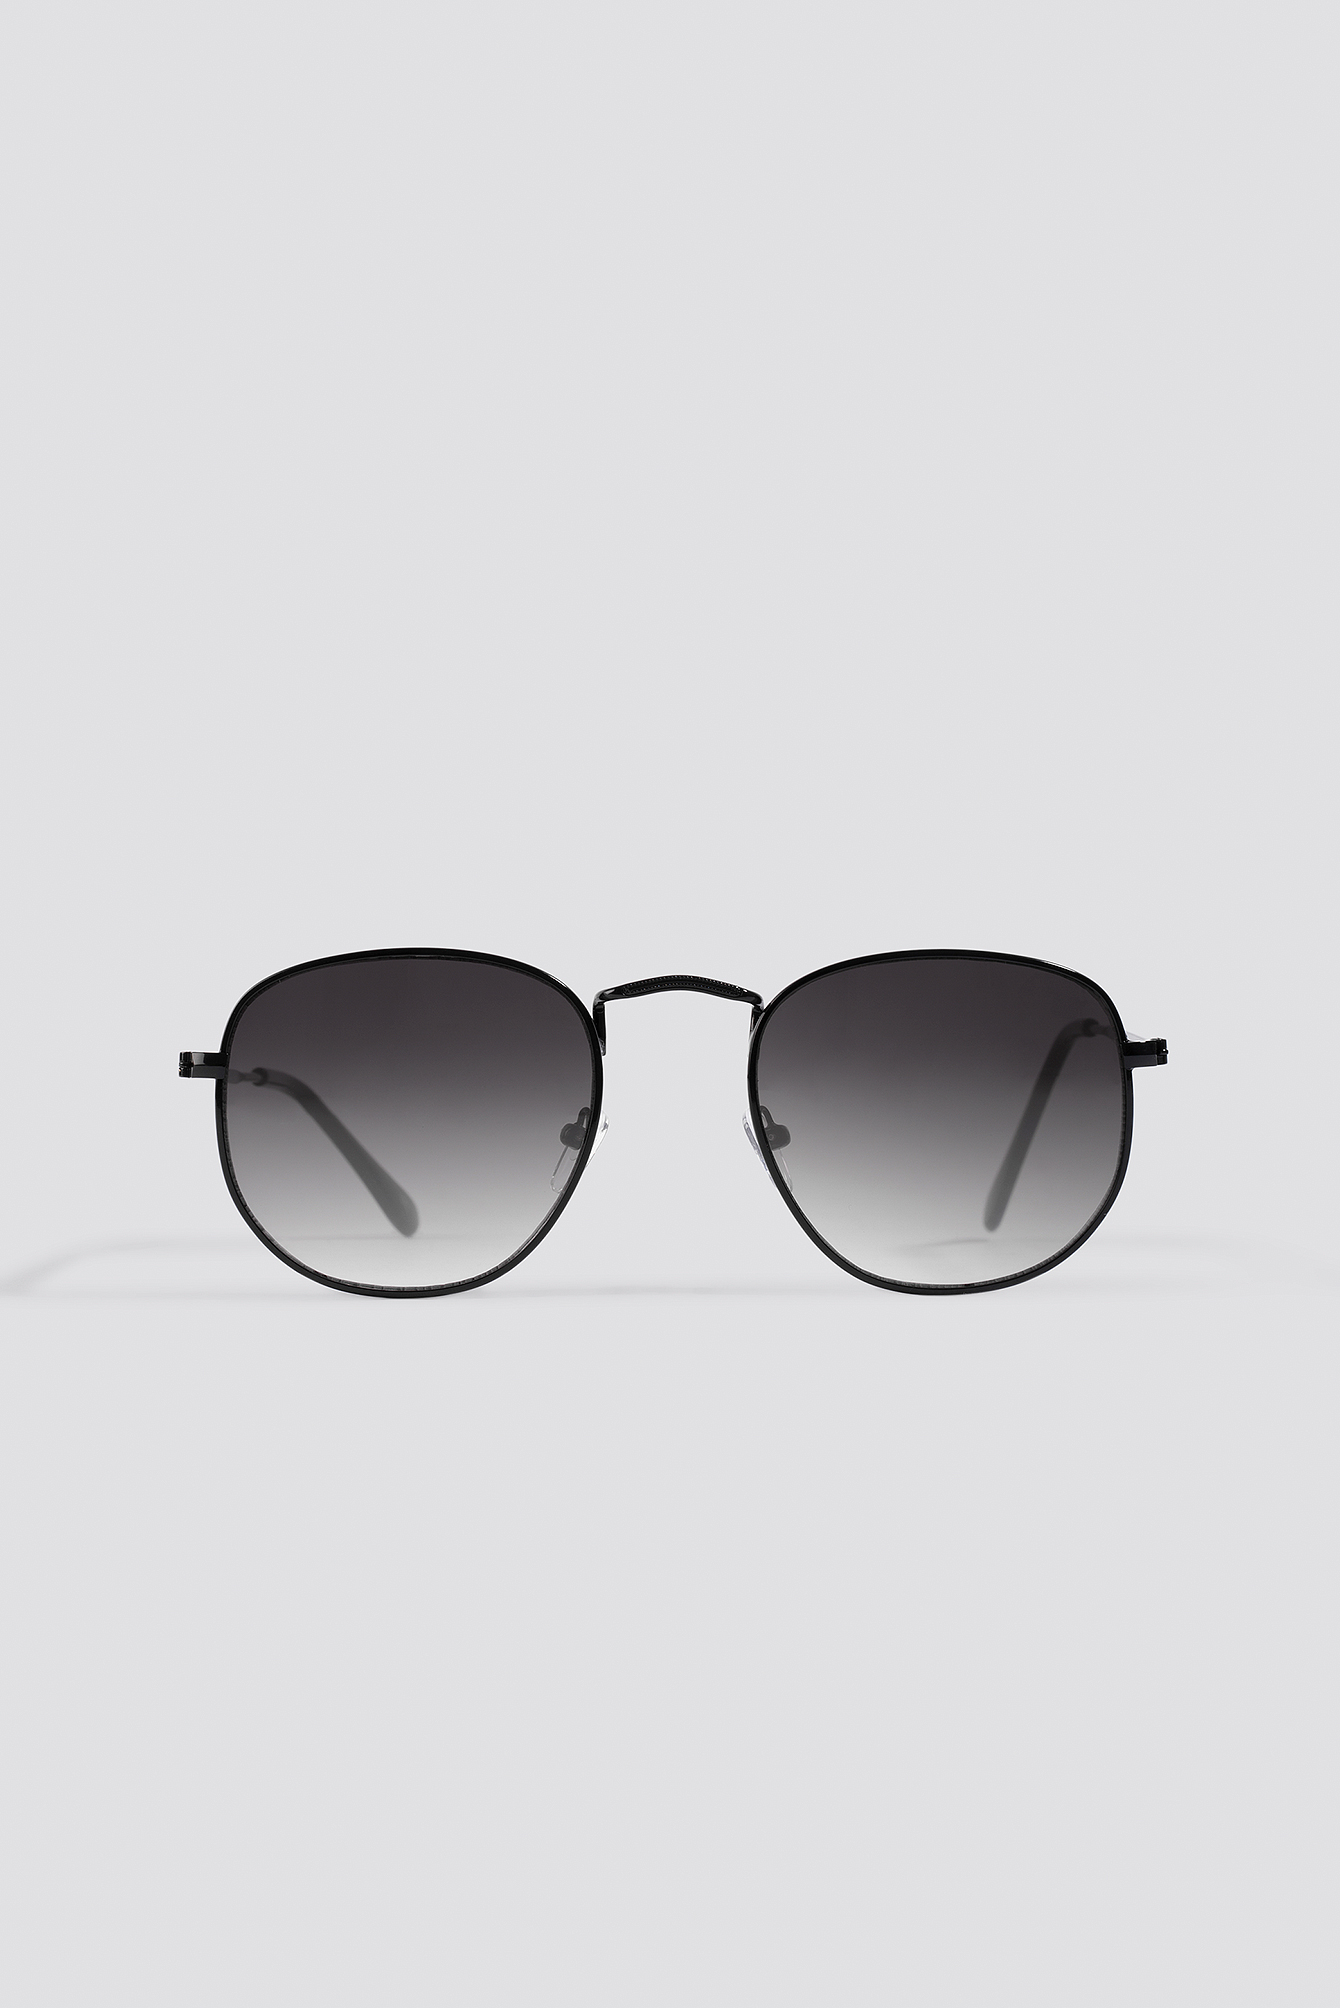 Black Rounded Square Sunglasses